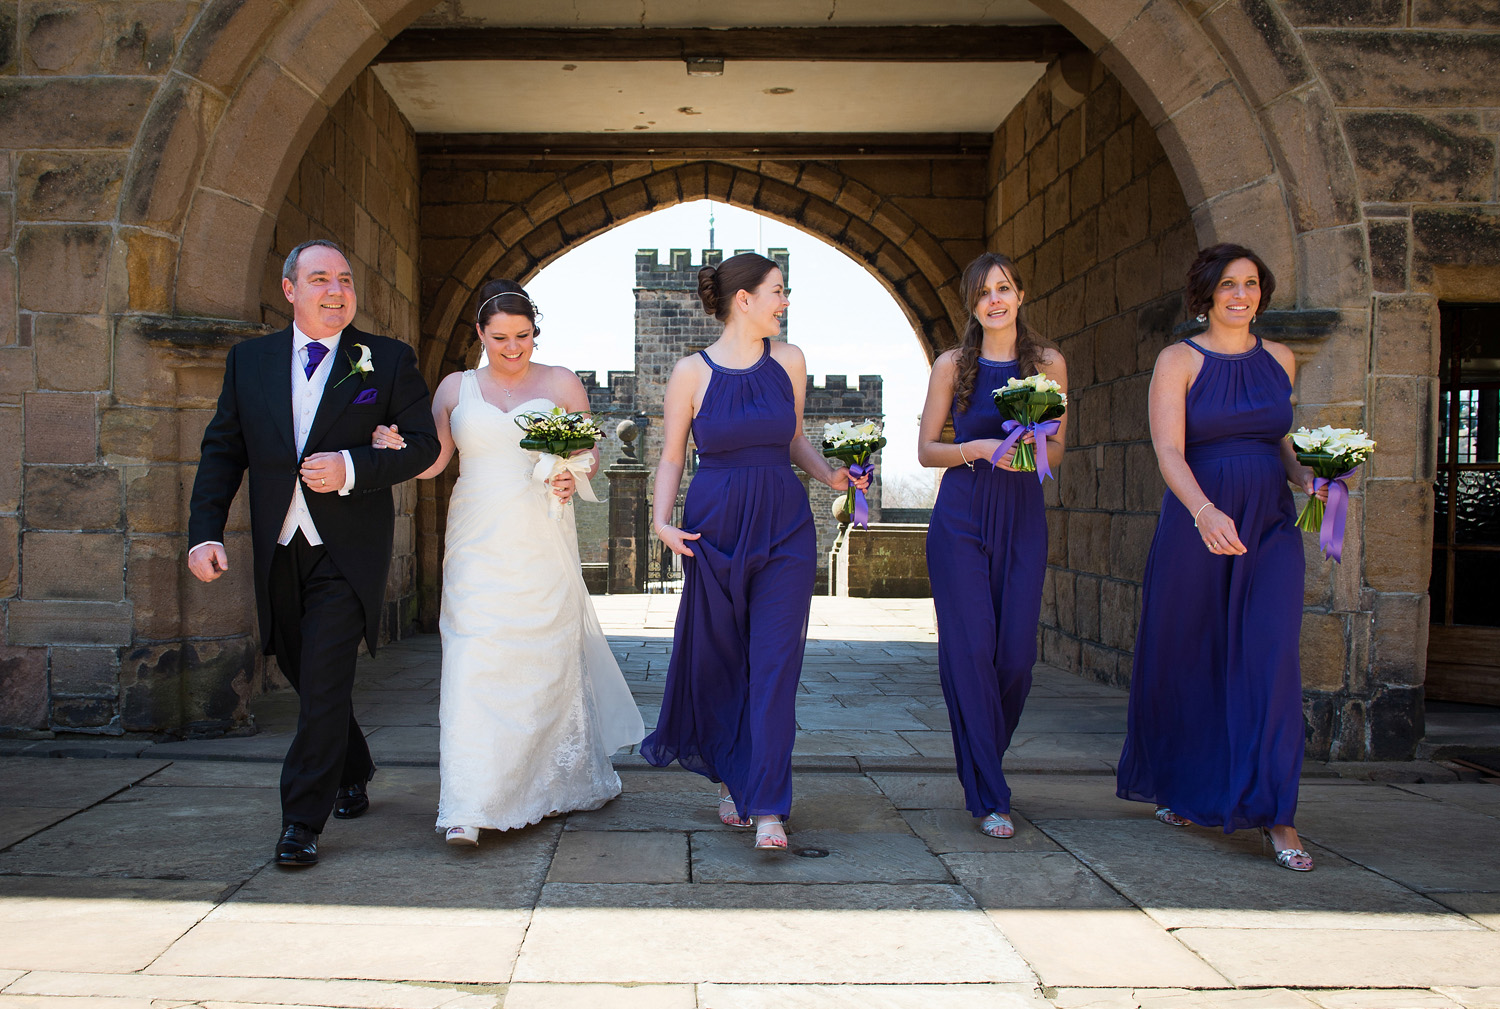 A wedding photograph at Hoghton Tower